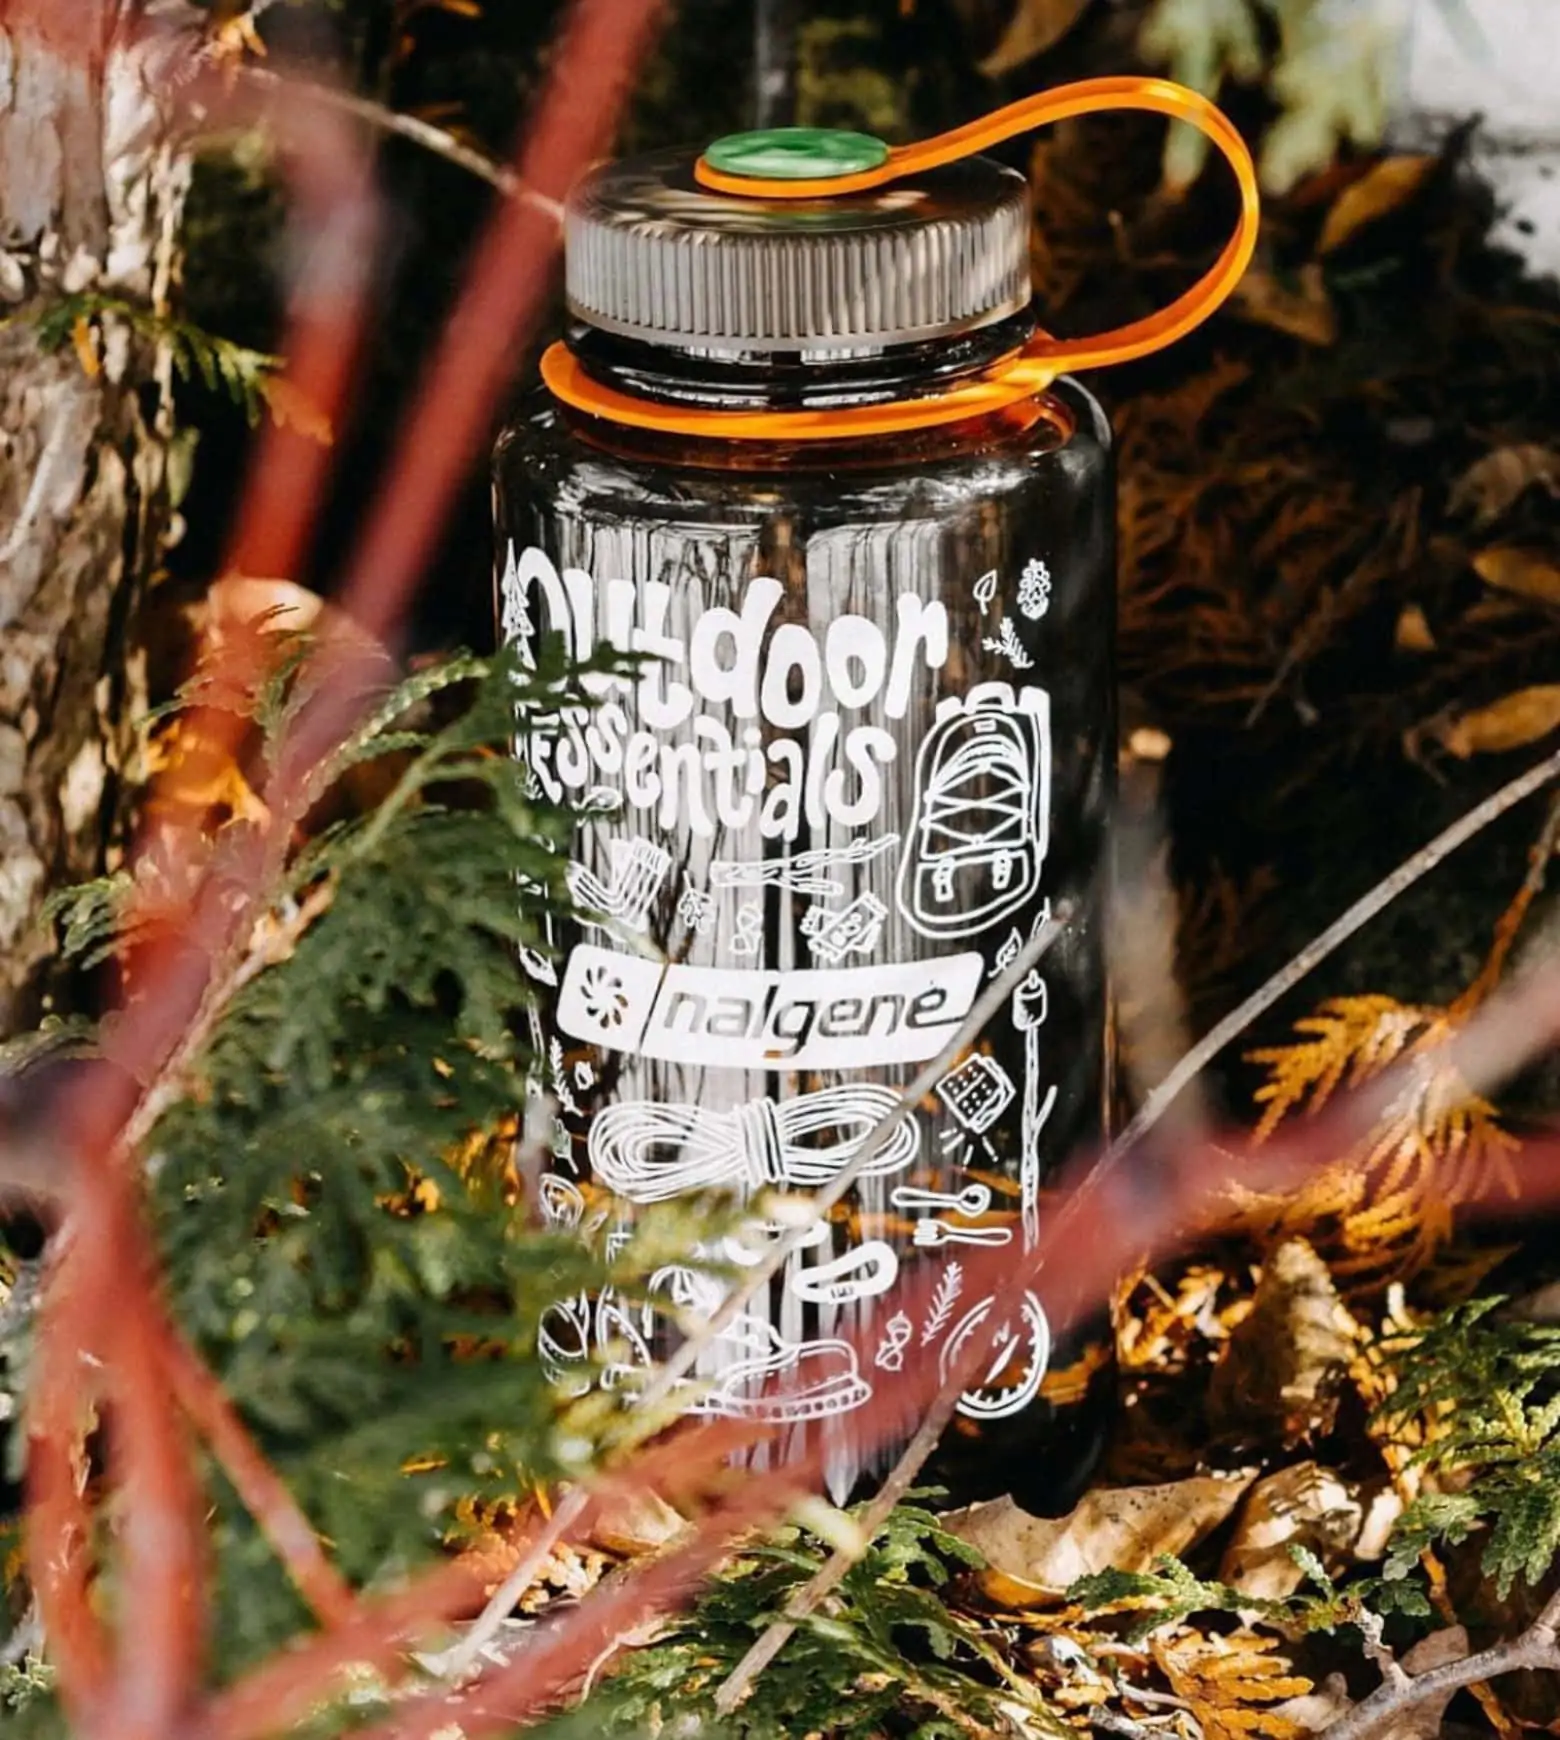 image of a Nalgene bottle sitting on the ground amongst leaves and trees